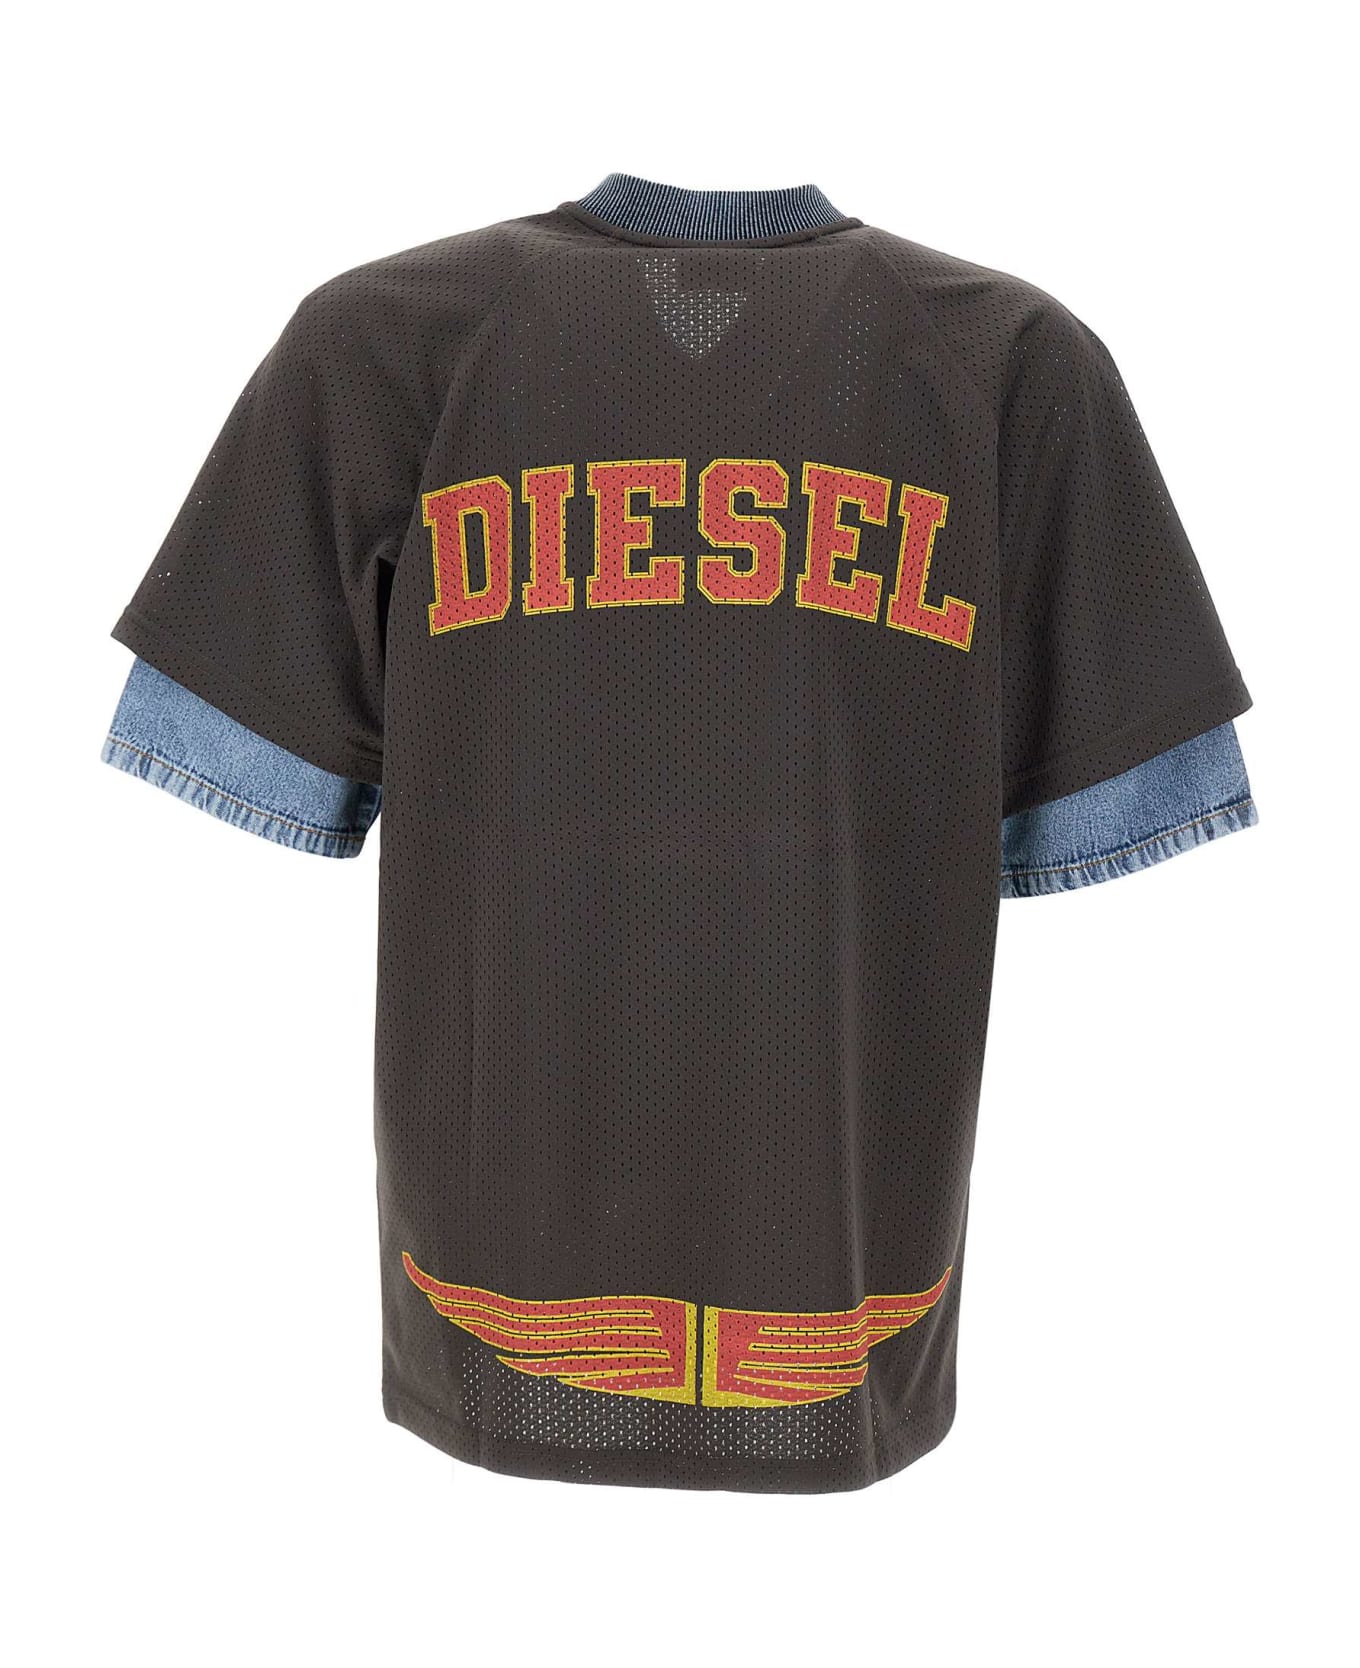 Diesel 't-voxt' T-shirt - Charcoal/grey シャツ